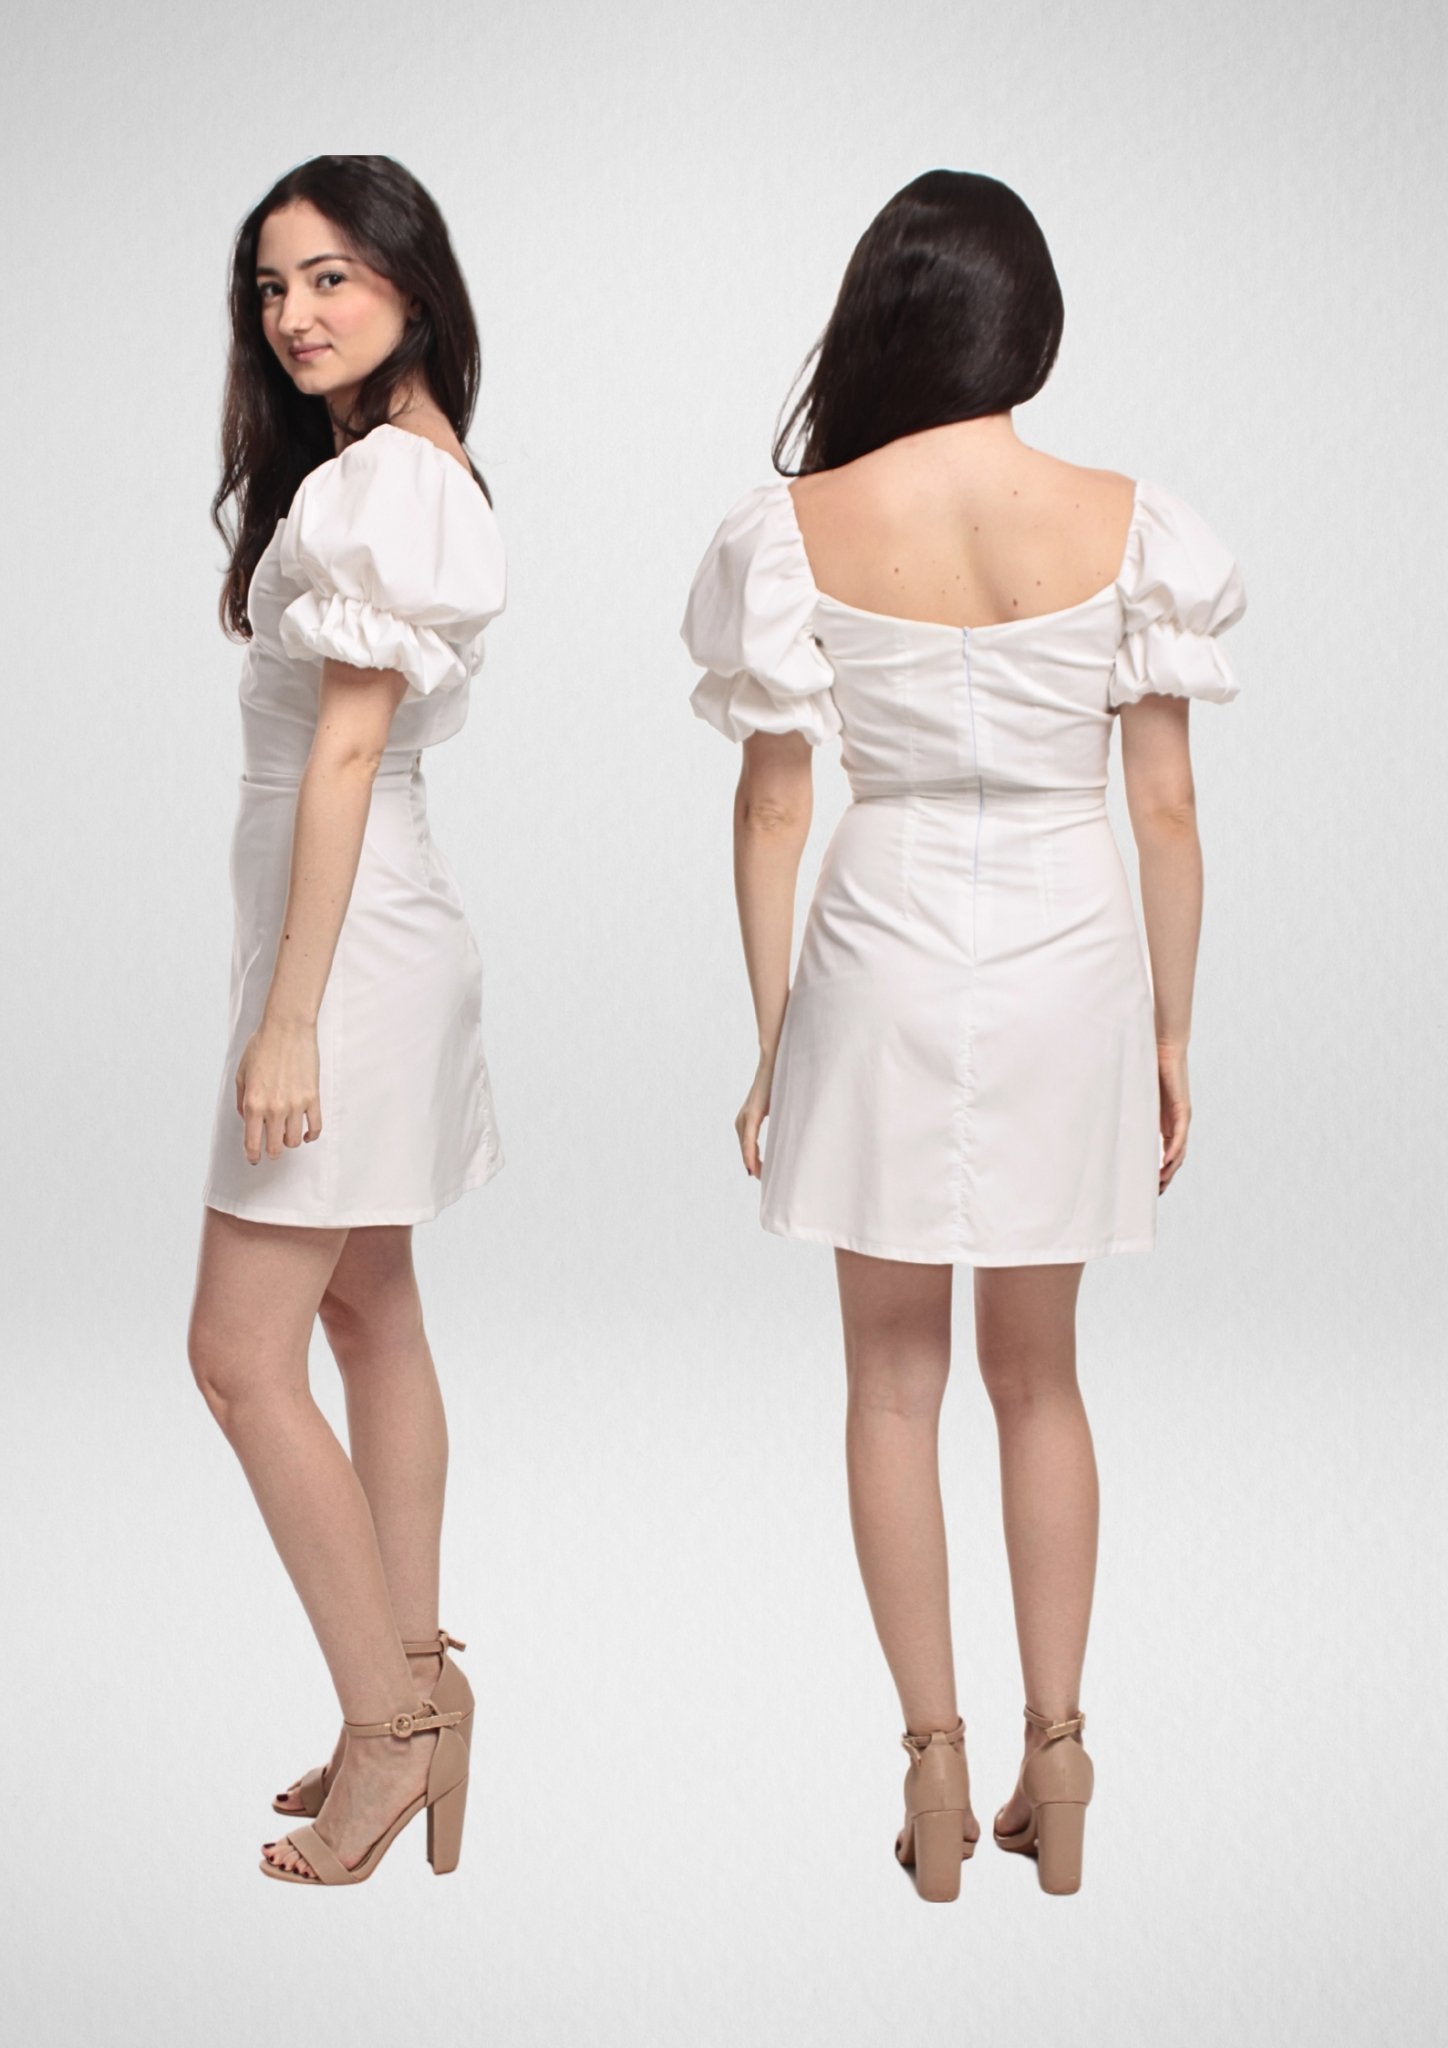 Best Selling Dress Sewing Pattern Bundle [Emma, Amelia, Mia] - Friedlies